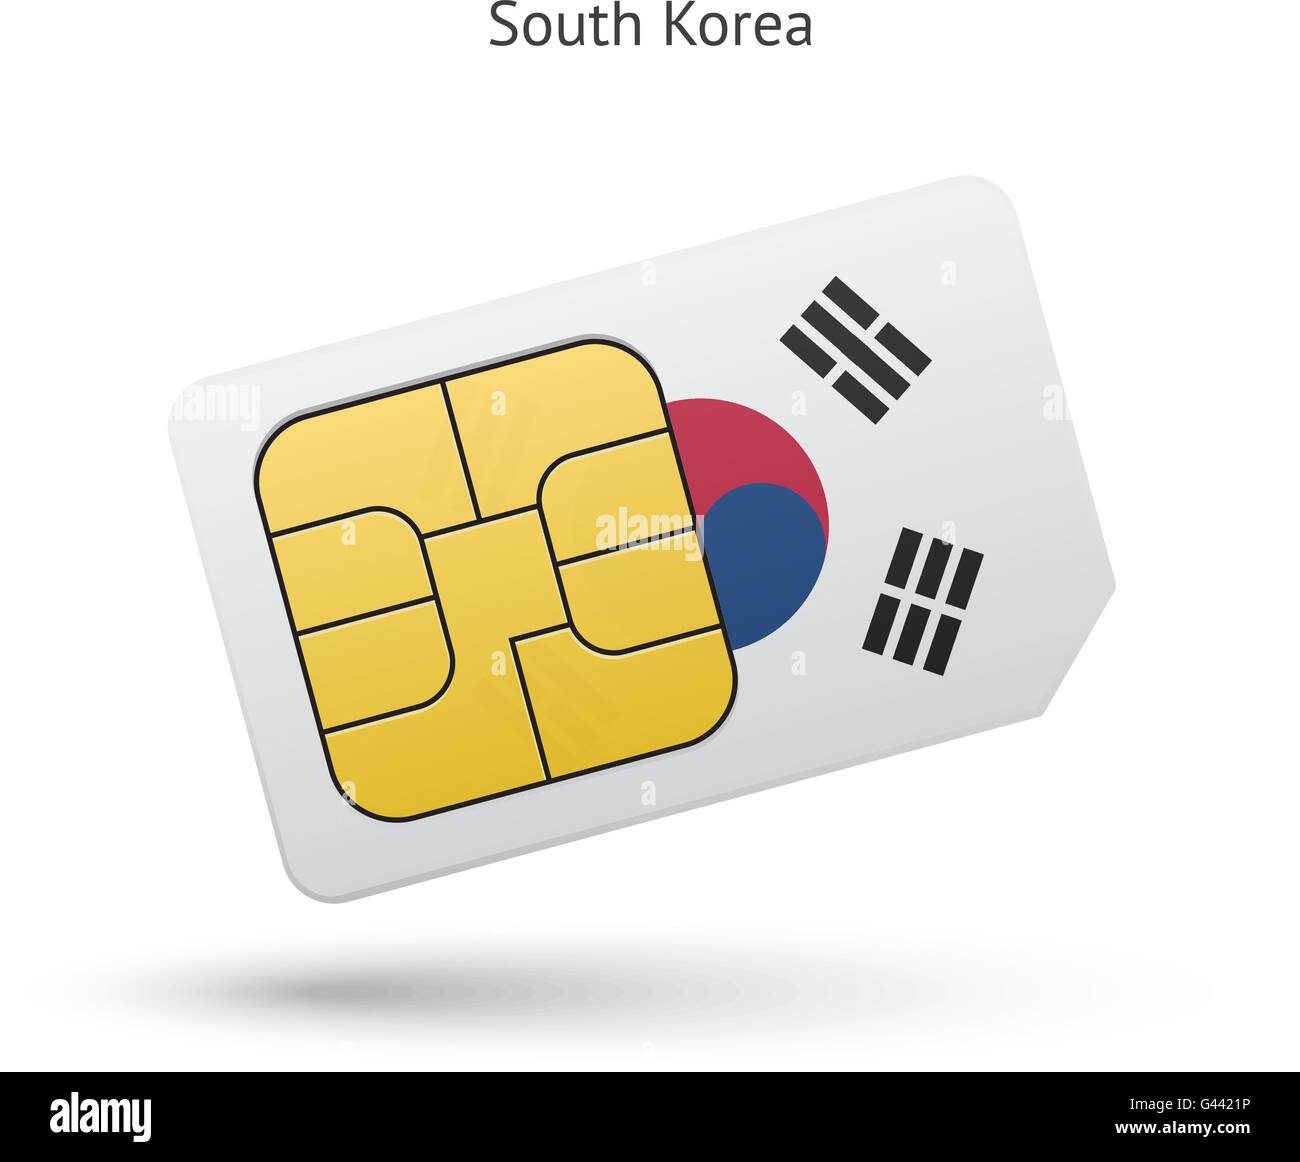 South Korea mobile phone sim card with flag. Stock Vector